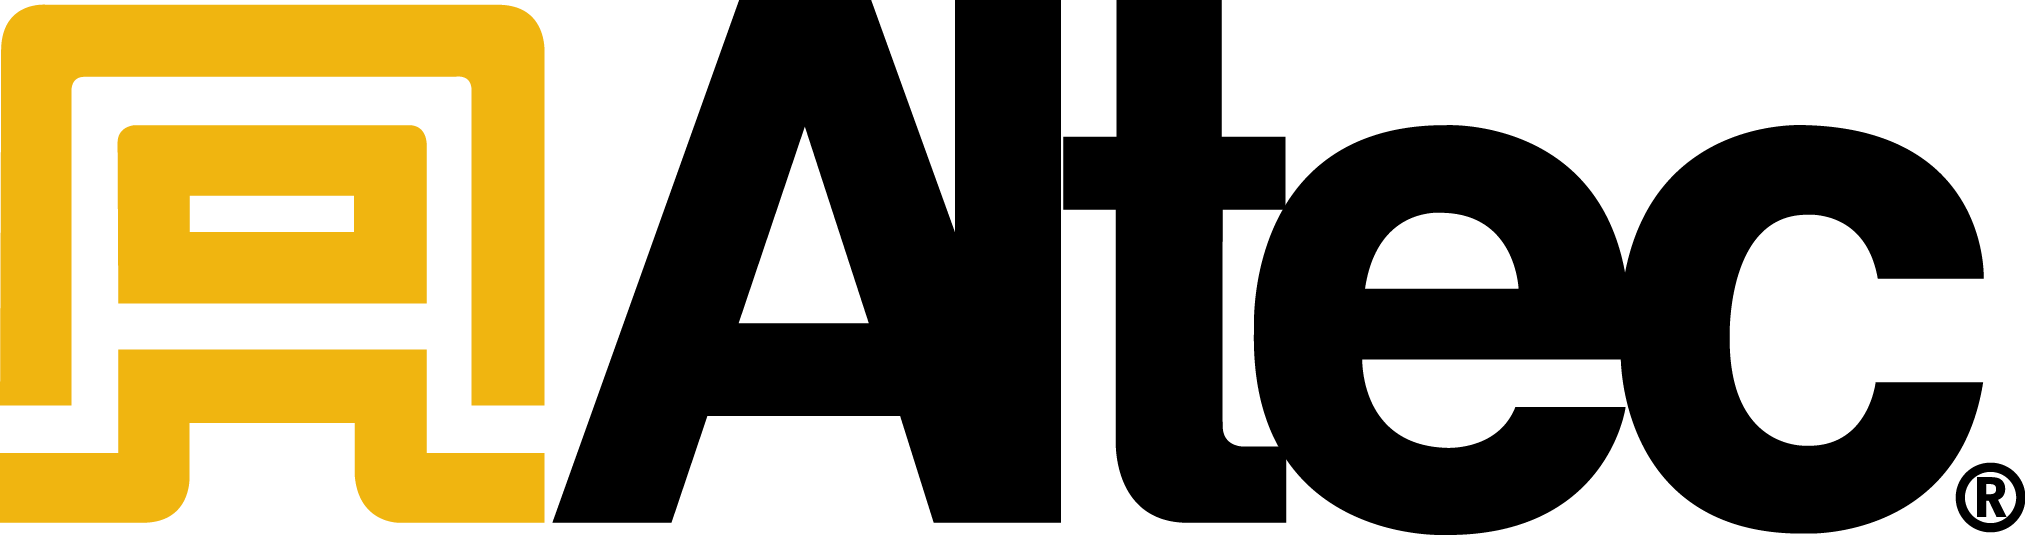 Altec Logo - Altec Website Linking Assets